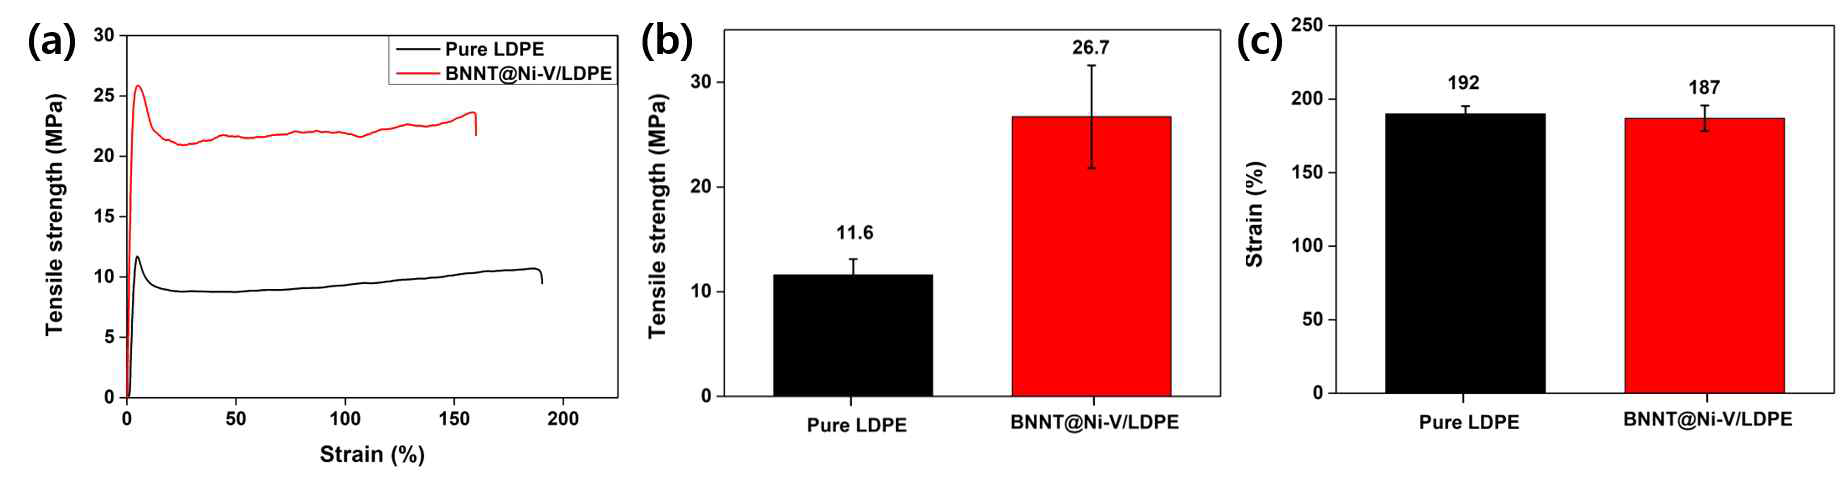 Pure LDPE 나노섬유매트 및 BNNT@Ni-V/LDPE복합나노섬유 매트 기계적 물성 평가: (a) Strain-Stress curve, (b) Tensile strength, (c) Strain